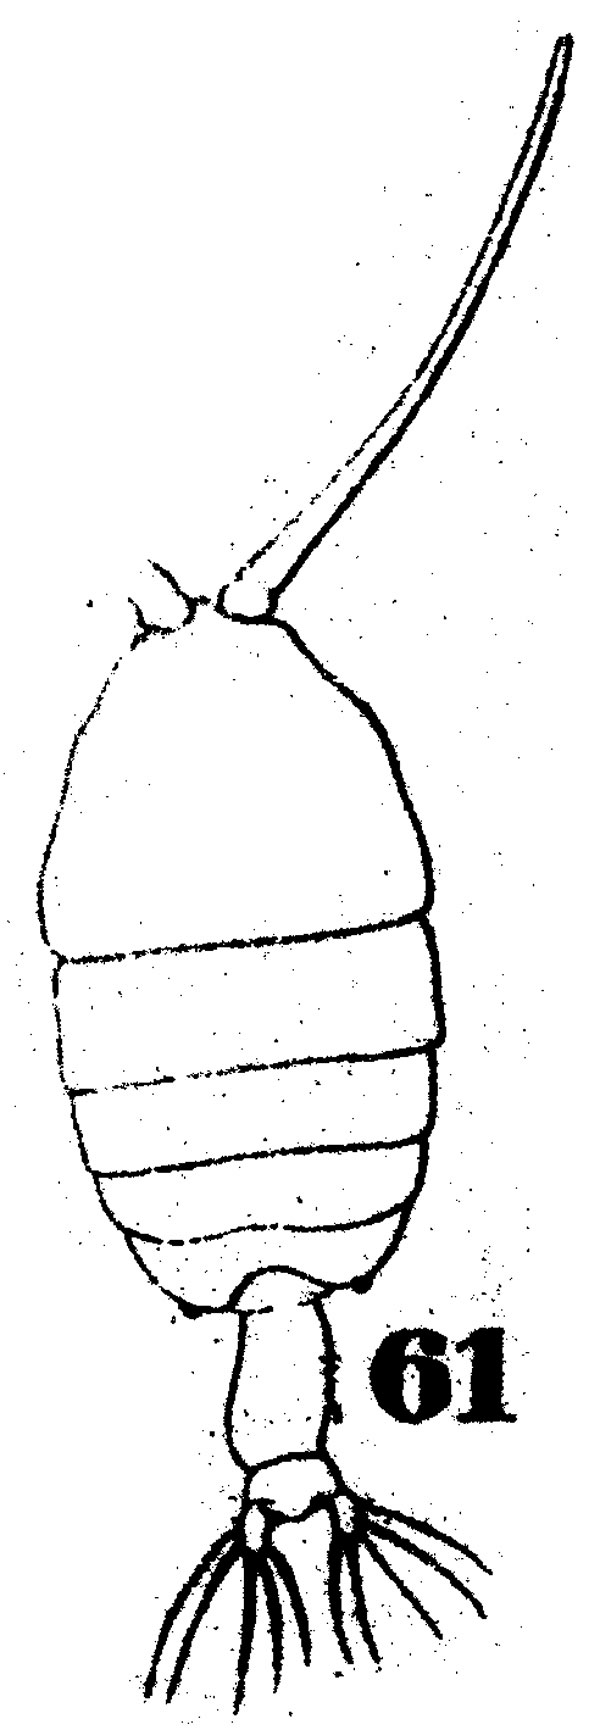 Species Pontellopsis tenuicauda - Plate 3 of morphological figures